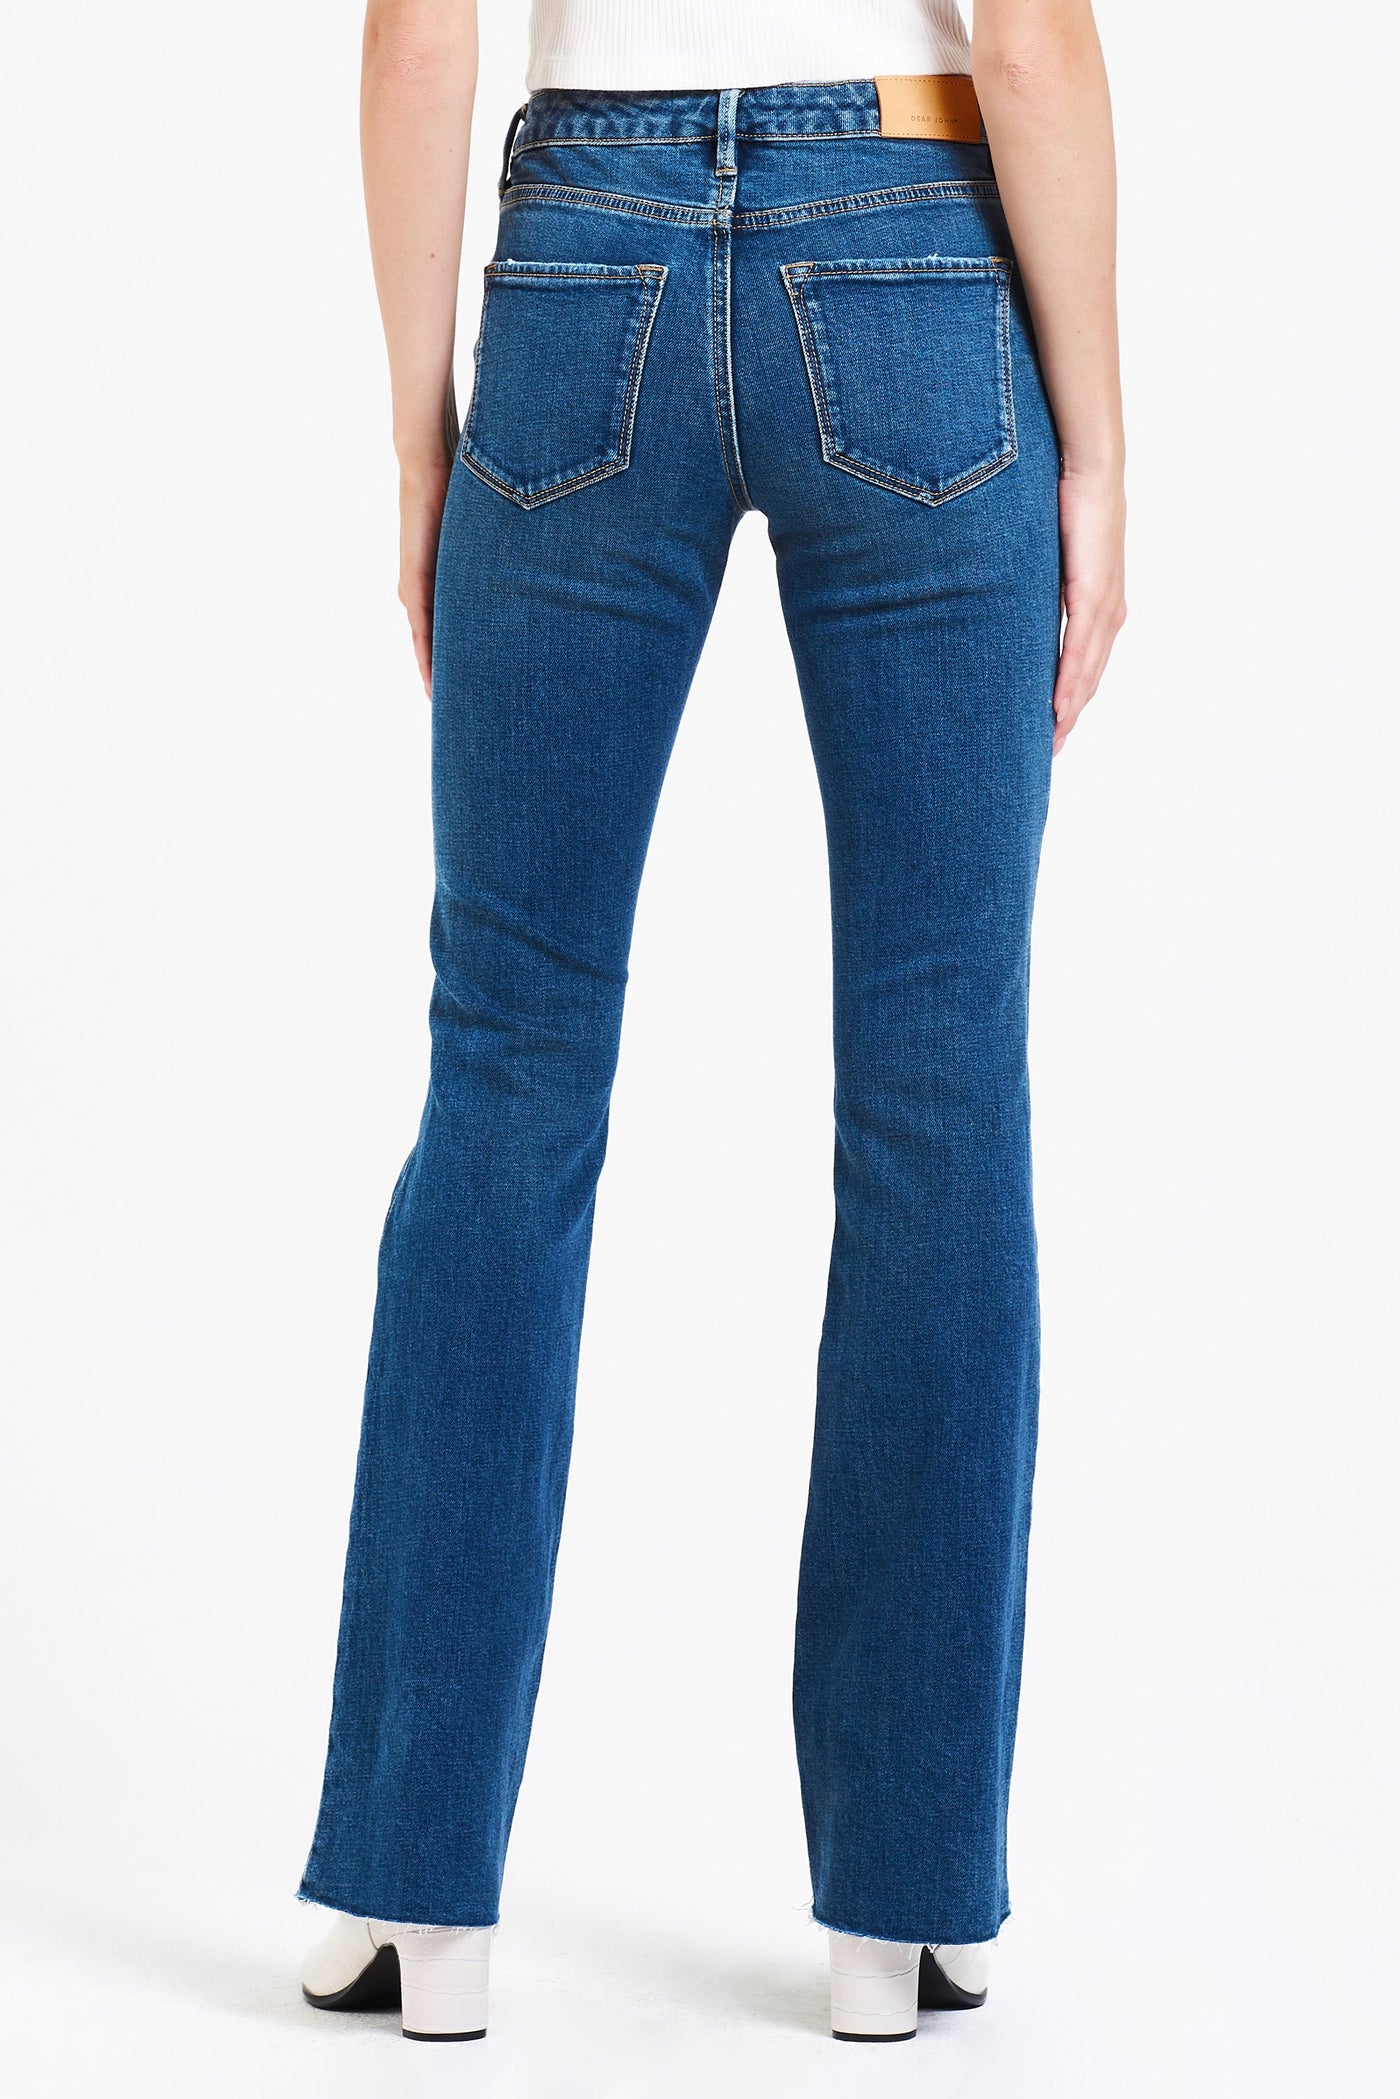 jaxtyn-high-rise-bootcut-jeans-st.tropez-back-image-dear-john-denim